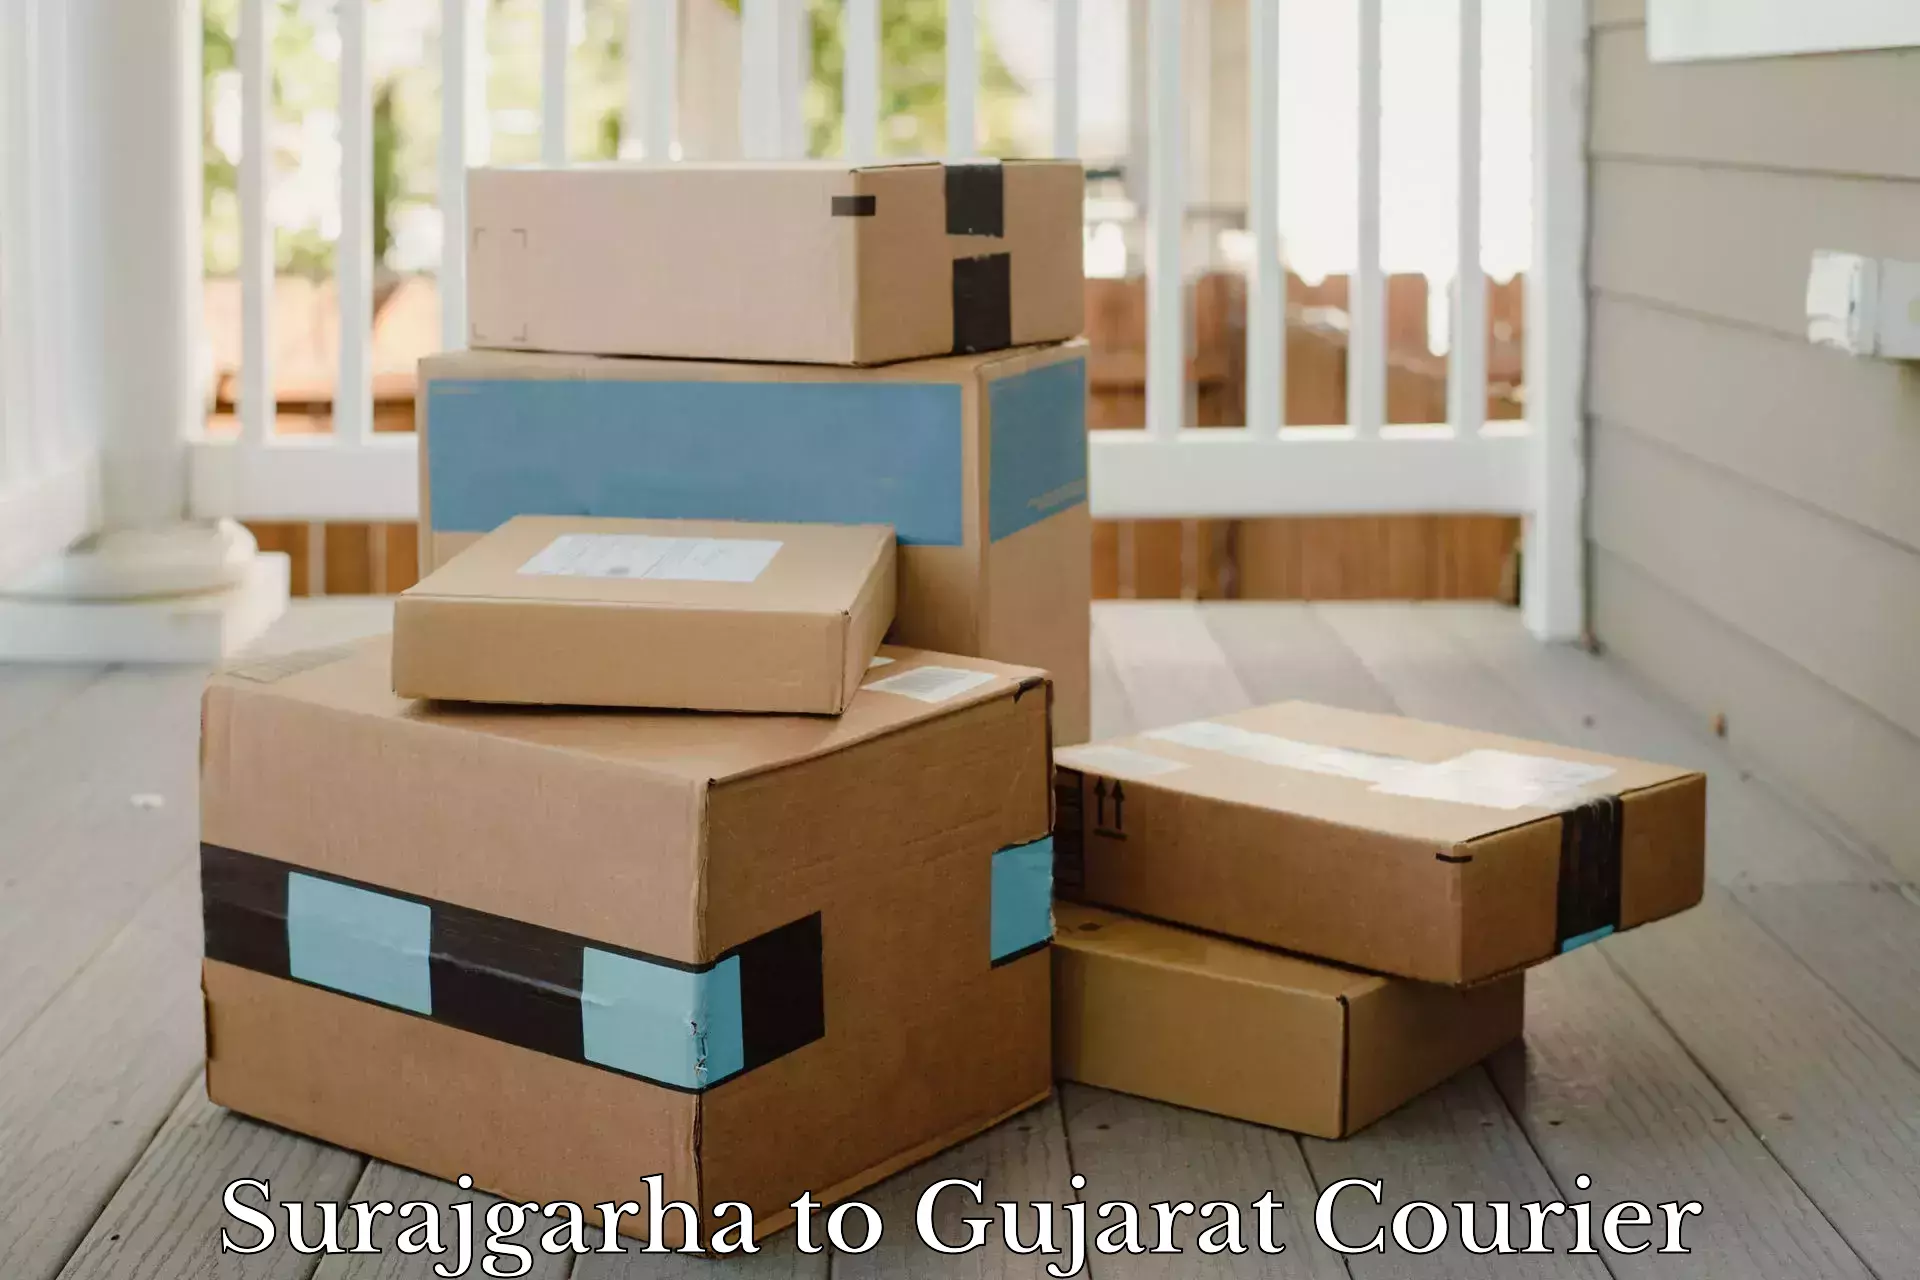 Courier service innovation Surajgarha to Dwarka